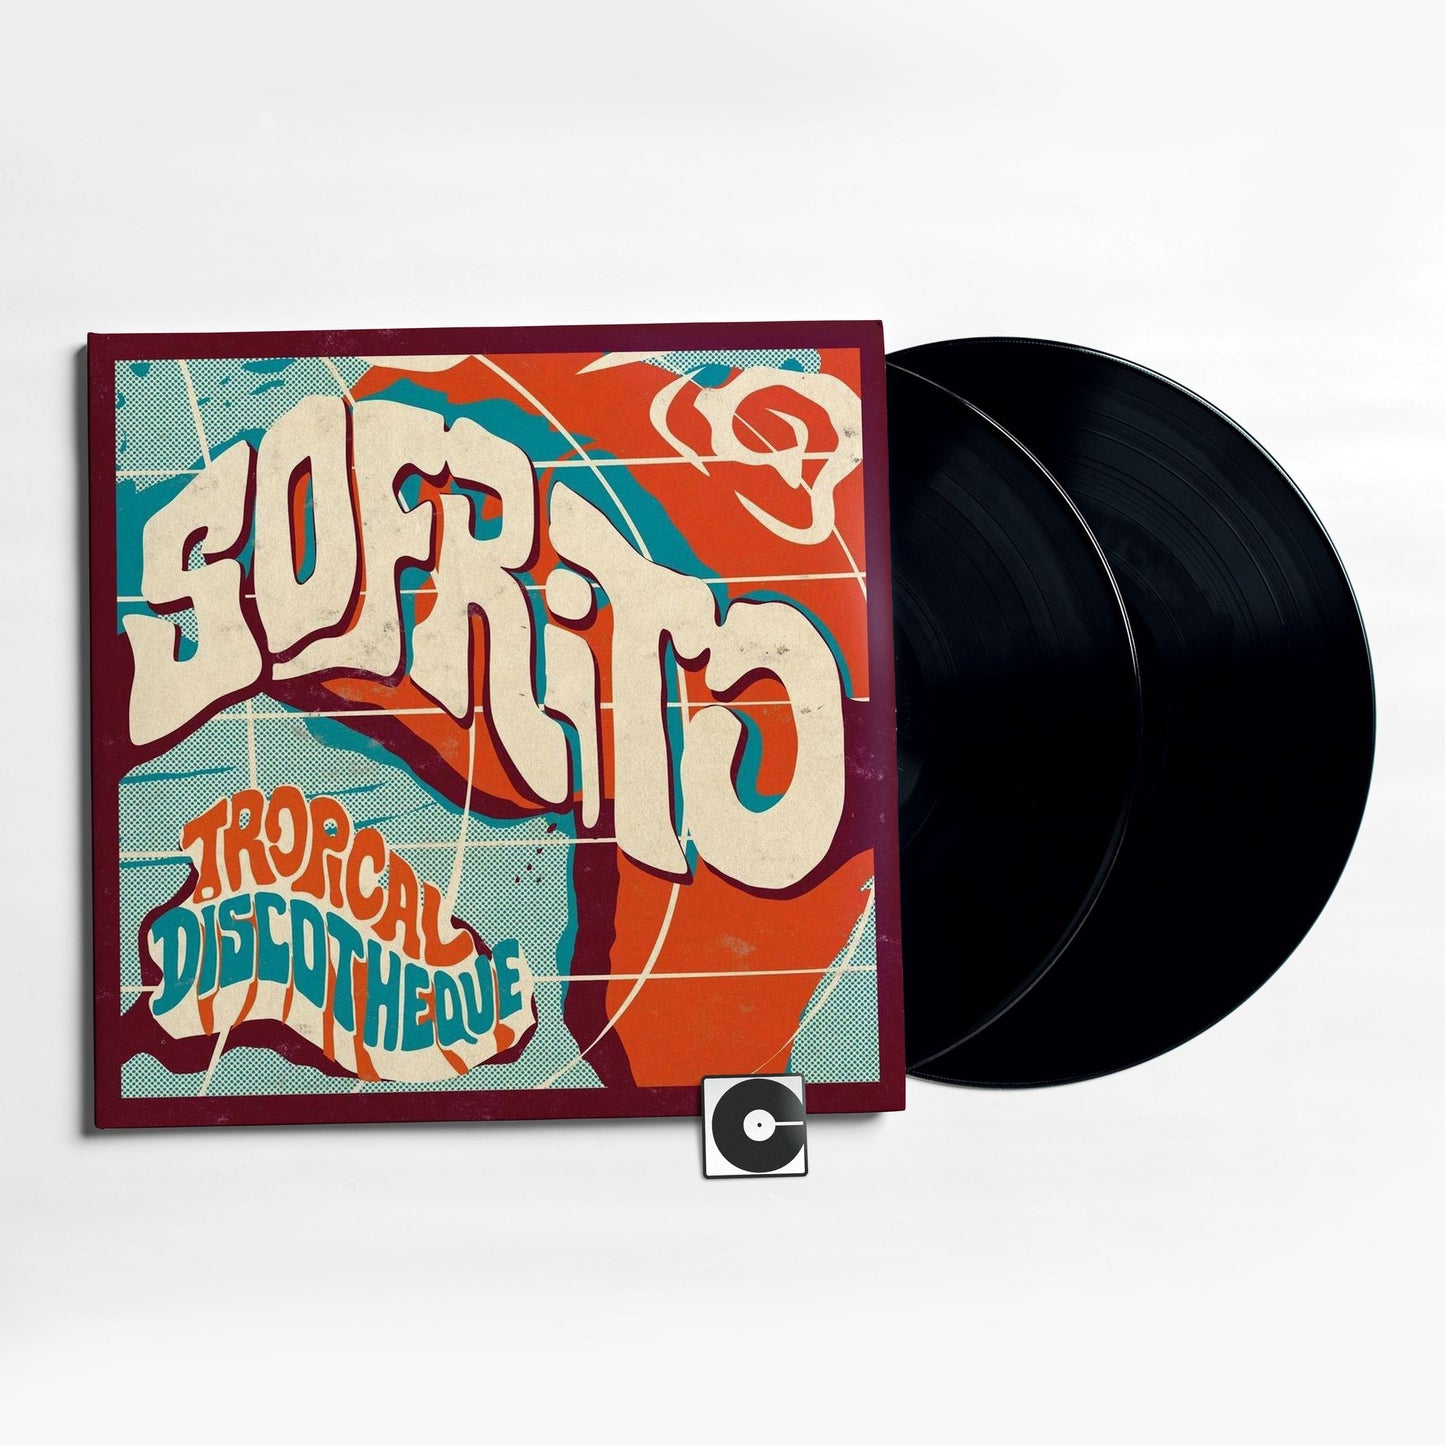 Various Artists - "Sofrito: Tropical Discotheque"